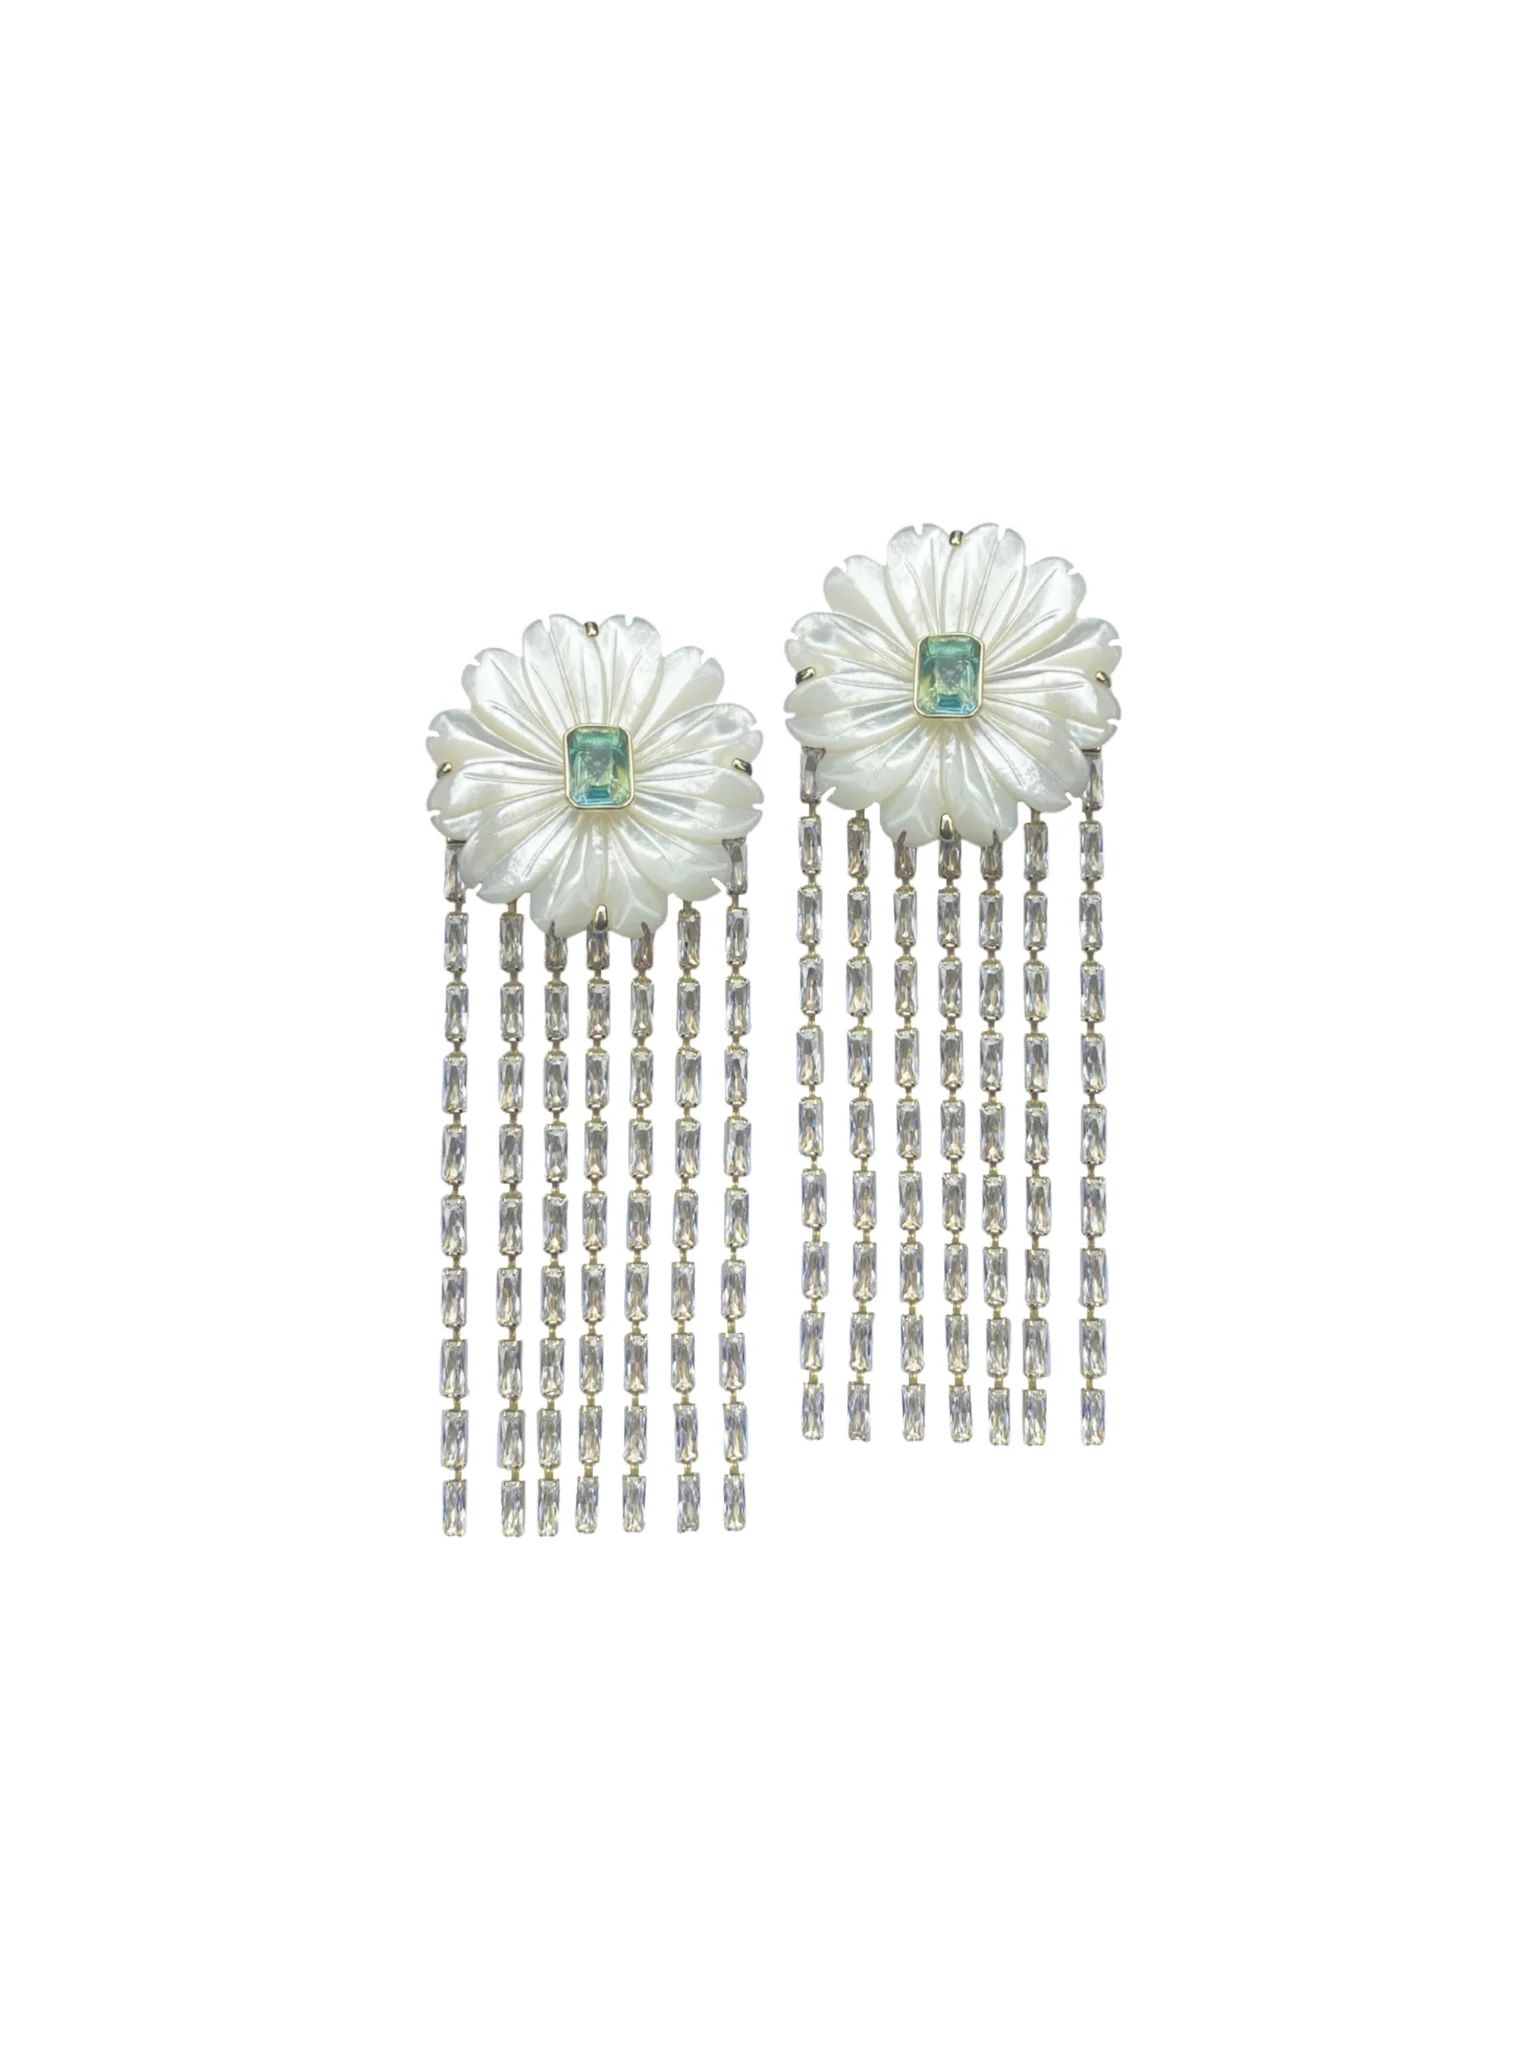 mother of pearl + quartz + embellished tassels | Nicola Bathie Jewelry